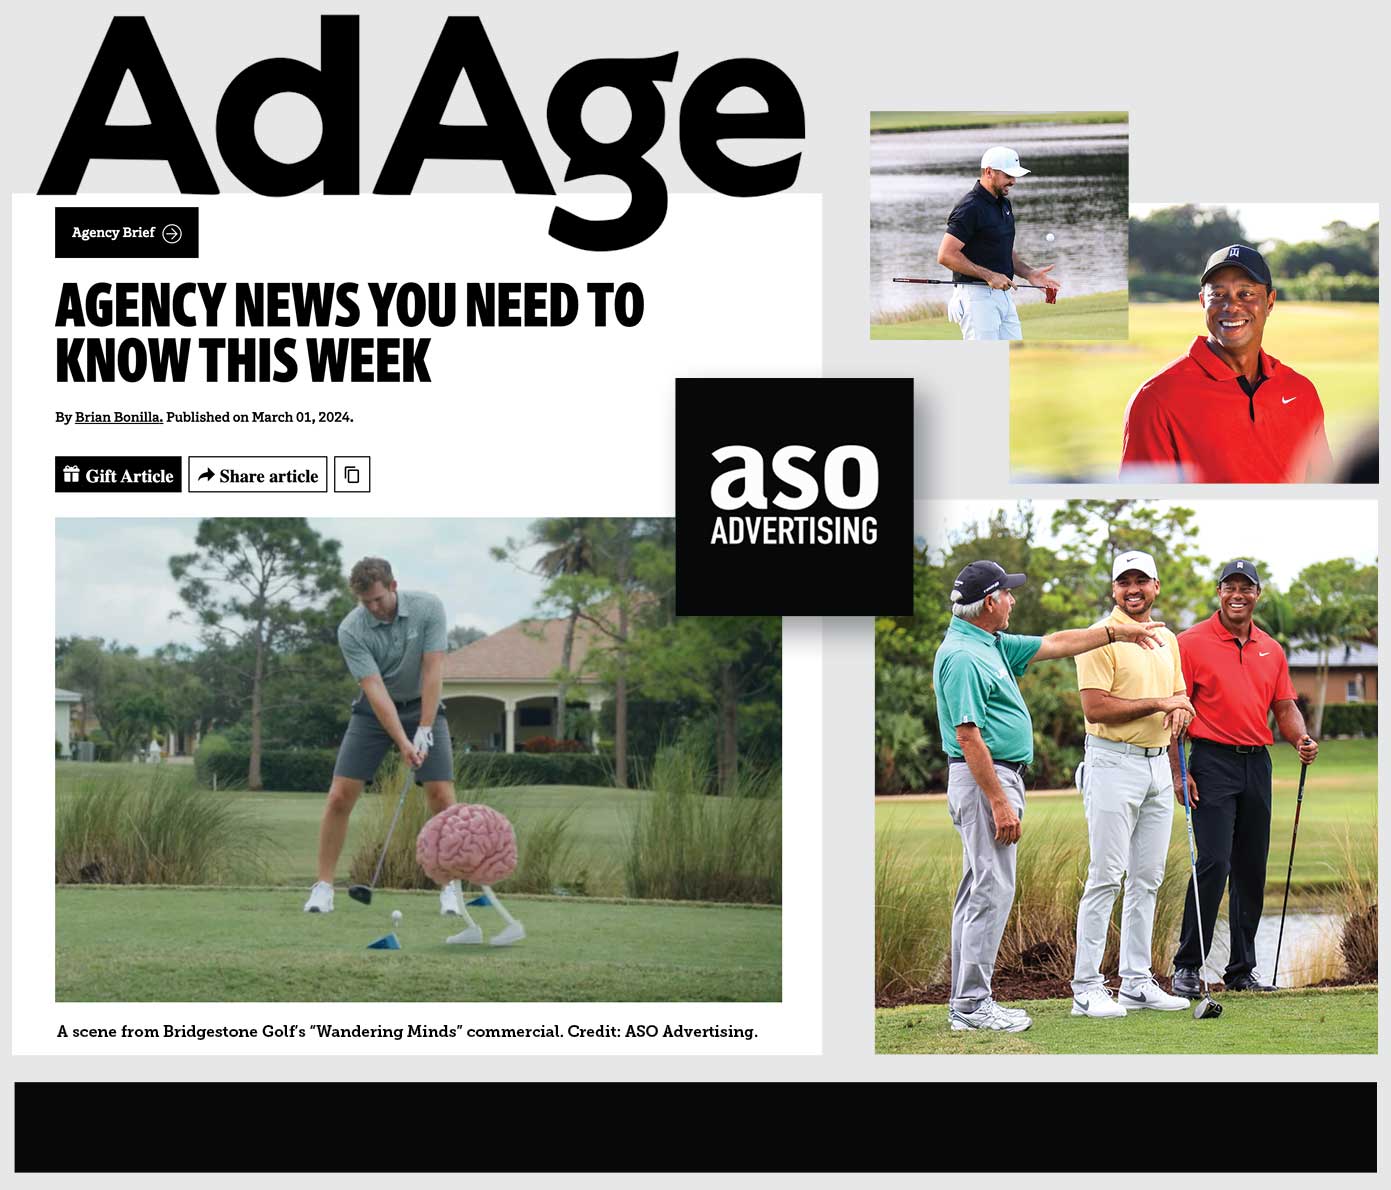 Bridgestone Golf featured in Ad Age